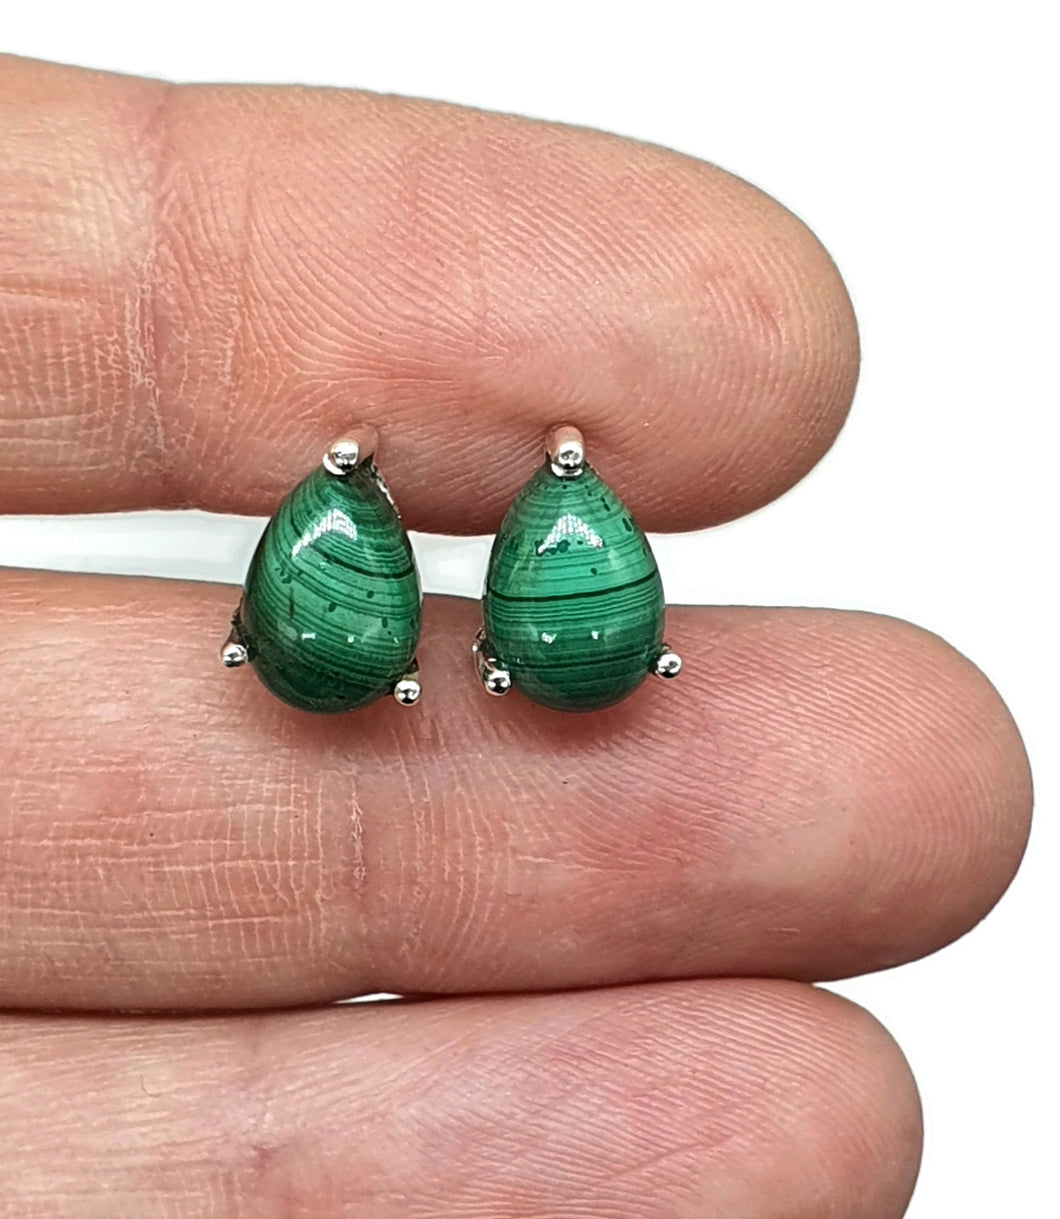 Malachite Stud Earrings, Sterling Silver, Pear Shaped, Beautiful Rich Green Gemstone - GemzAustralia 